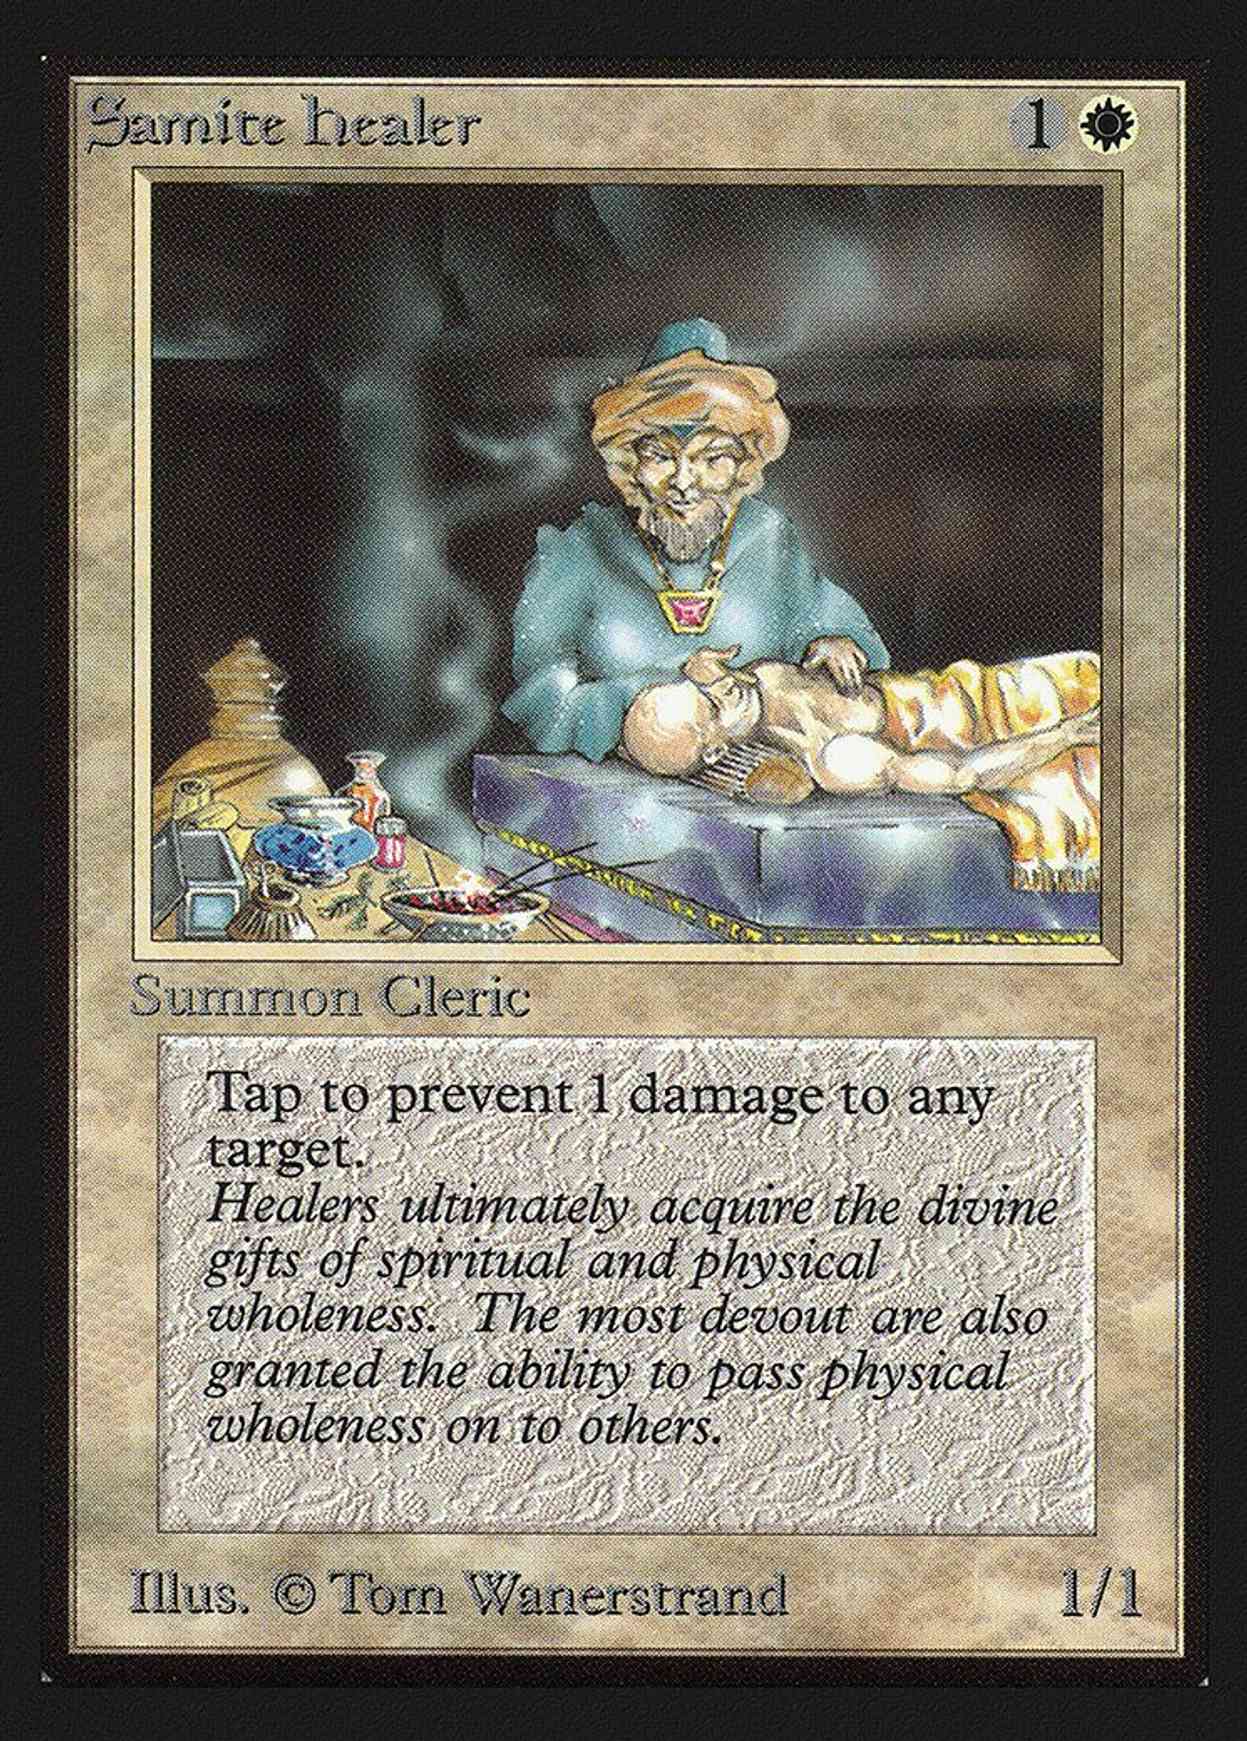 Samite Healer (IE) magic card front